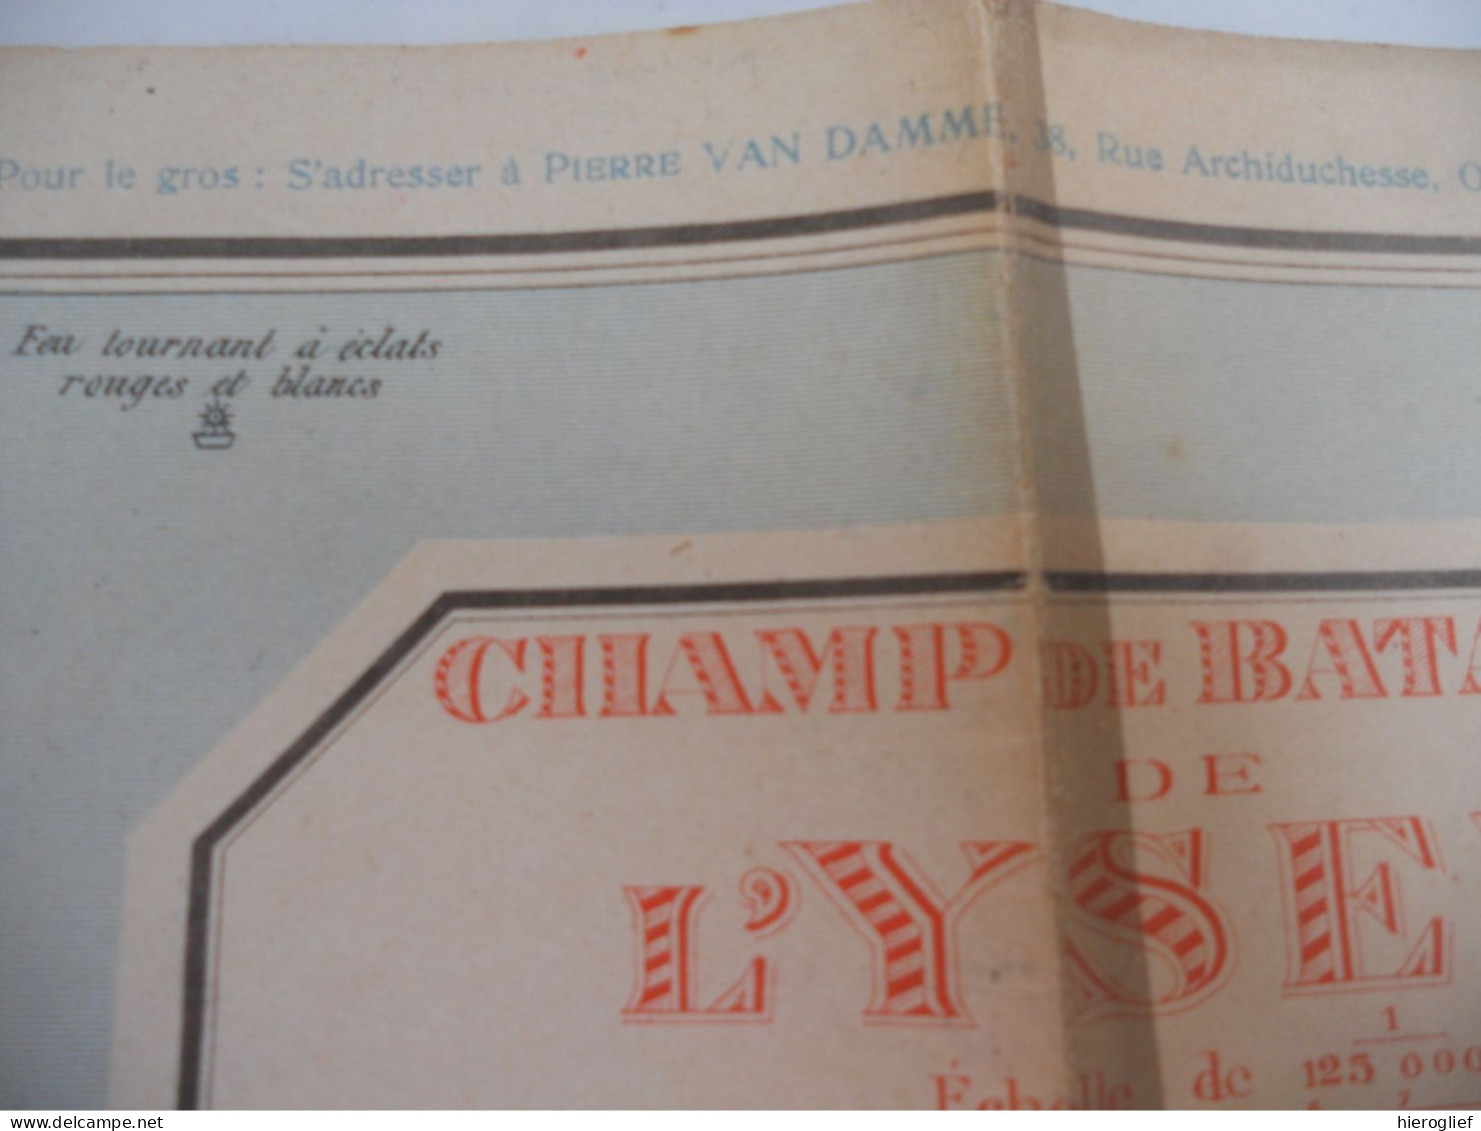 kaart CHAMP de BATAILLE de l' YSER imprimerie Goffin Bruxelles éditeur Pieters 1914 1918 oorlog frontstreek ijzer guerre